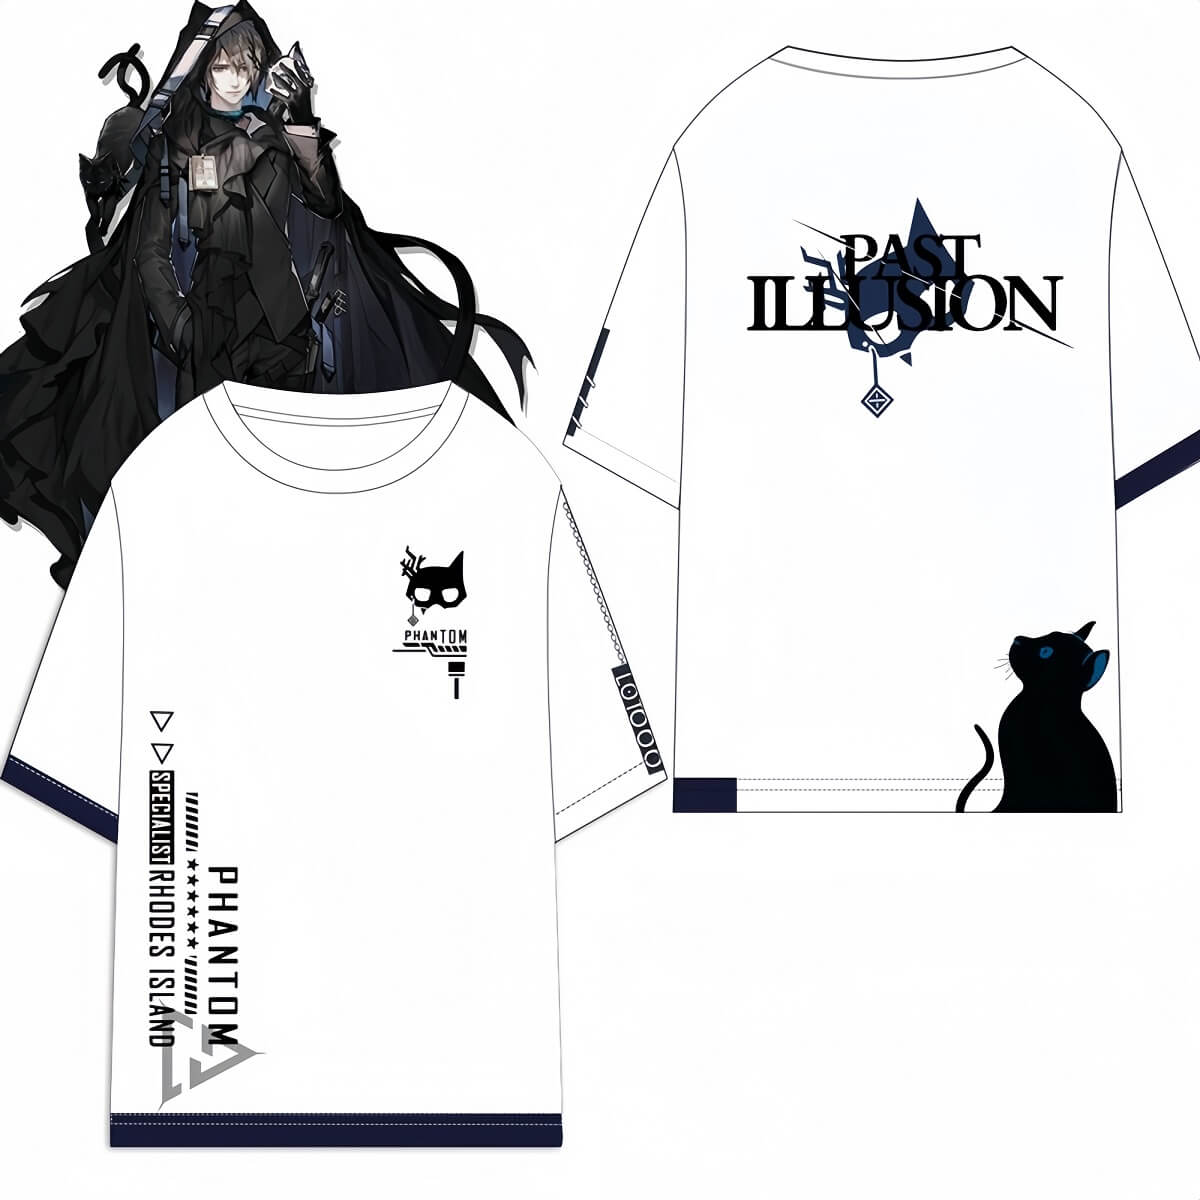 Arknights Phantom character style T-shirt